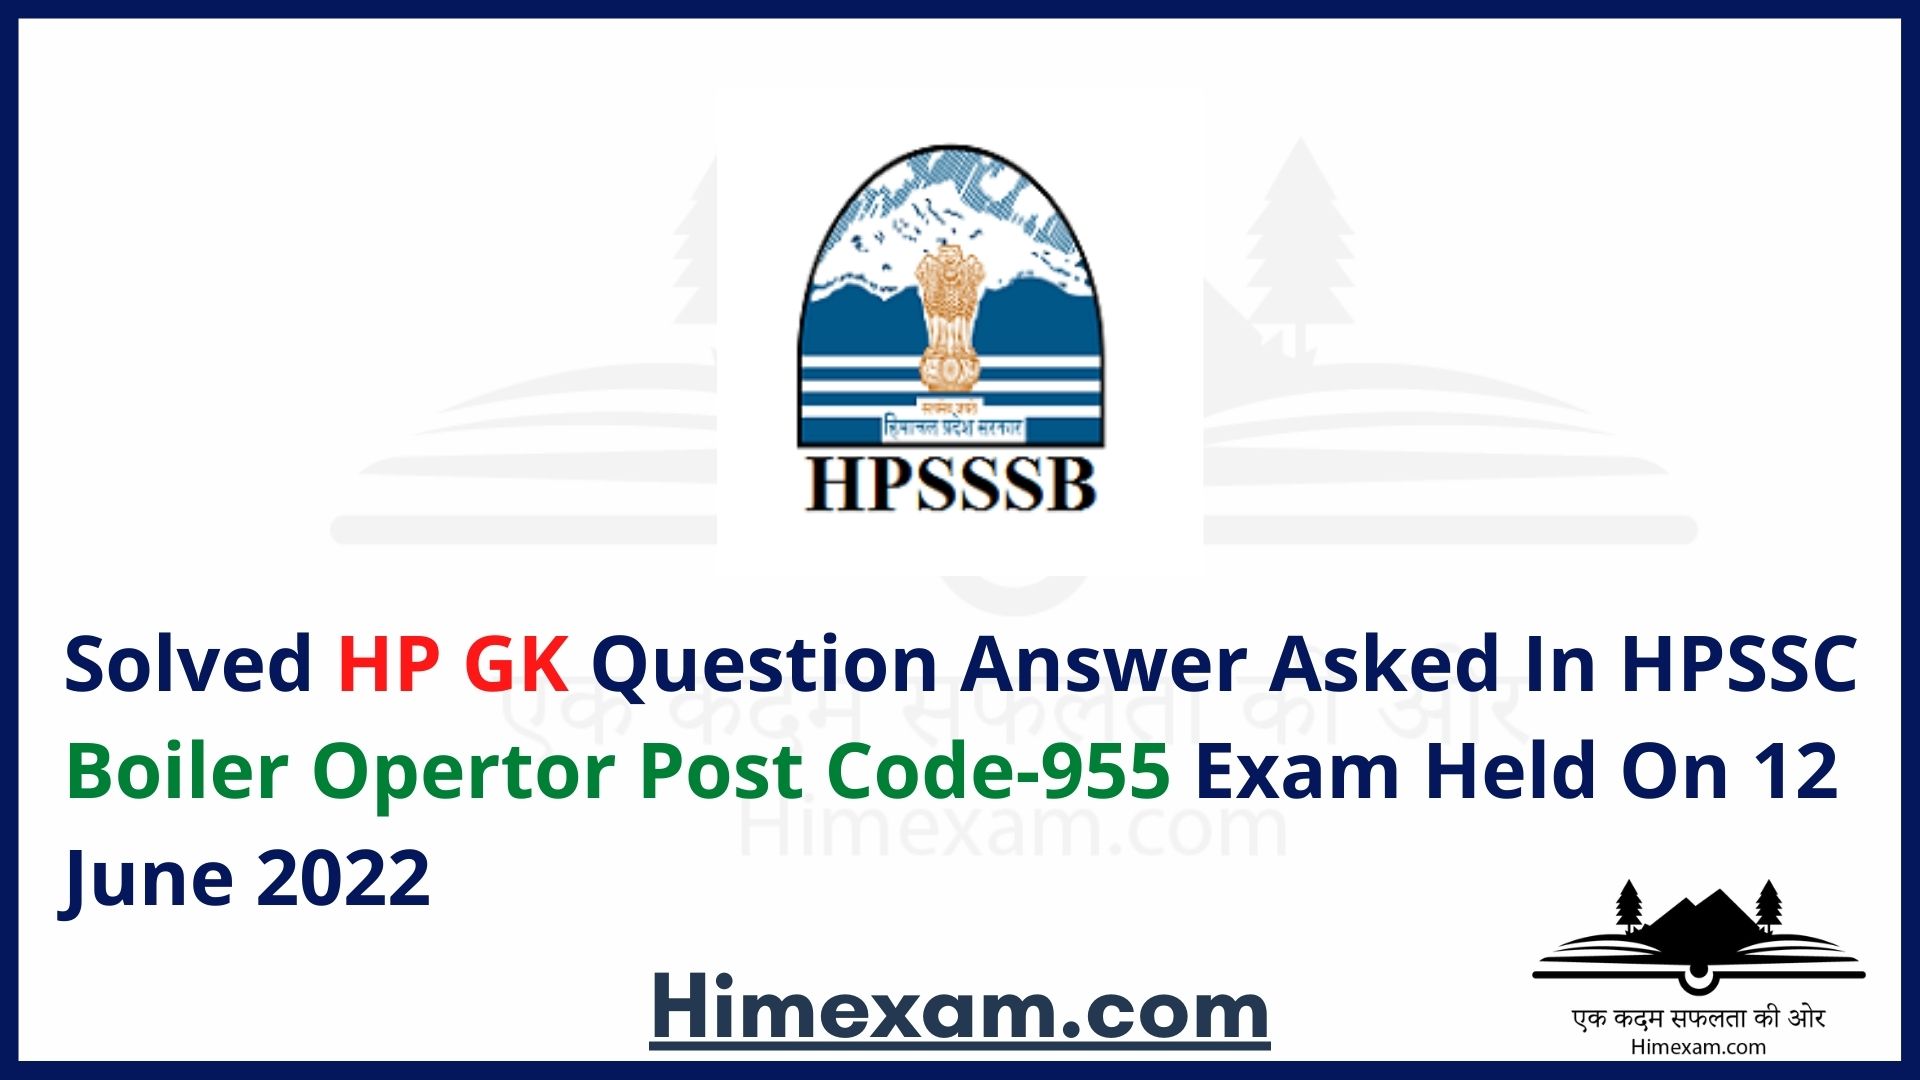 Solved HP GK Question Answer Asked In HPSSC Boiler Opertor Post Code-955 Exam Held On 12 June 2022